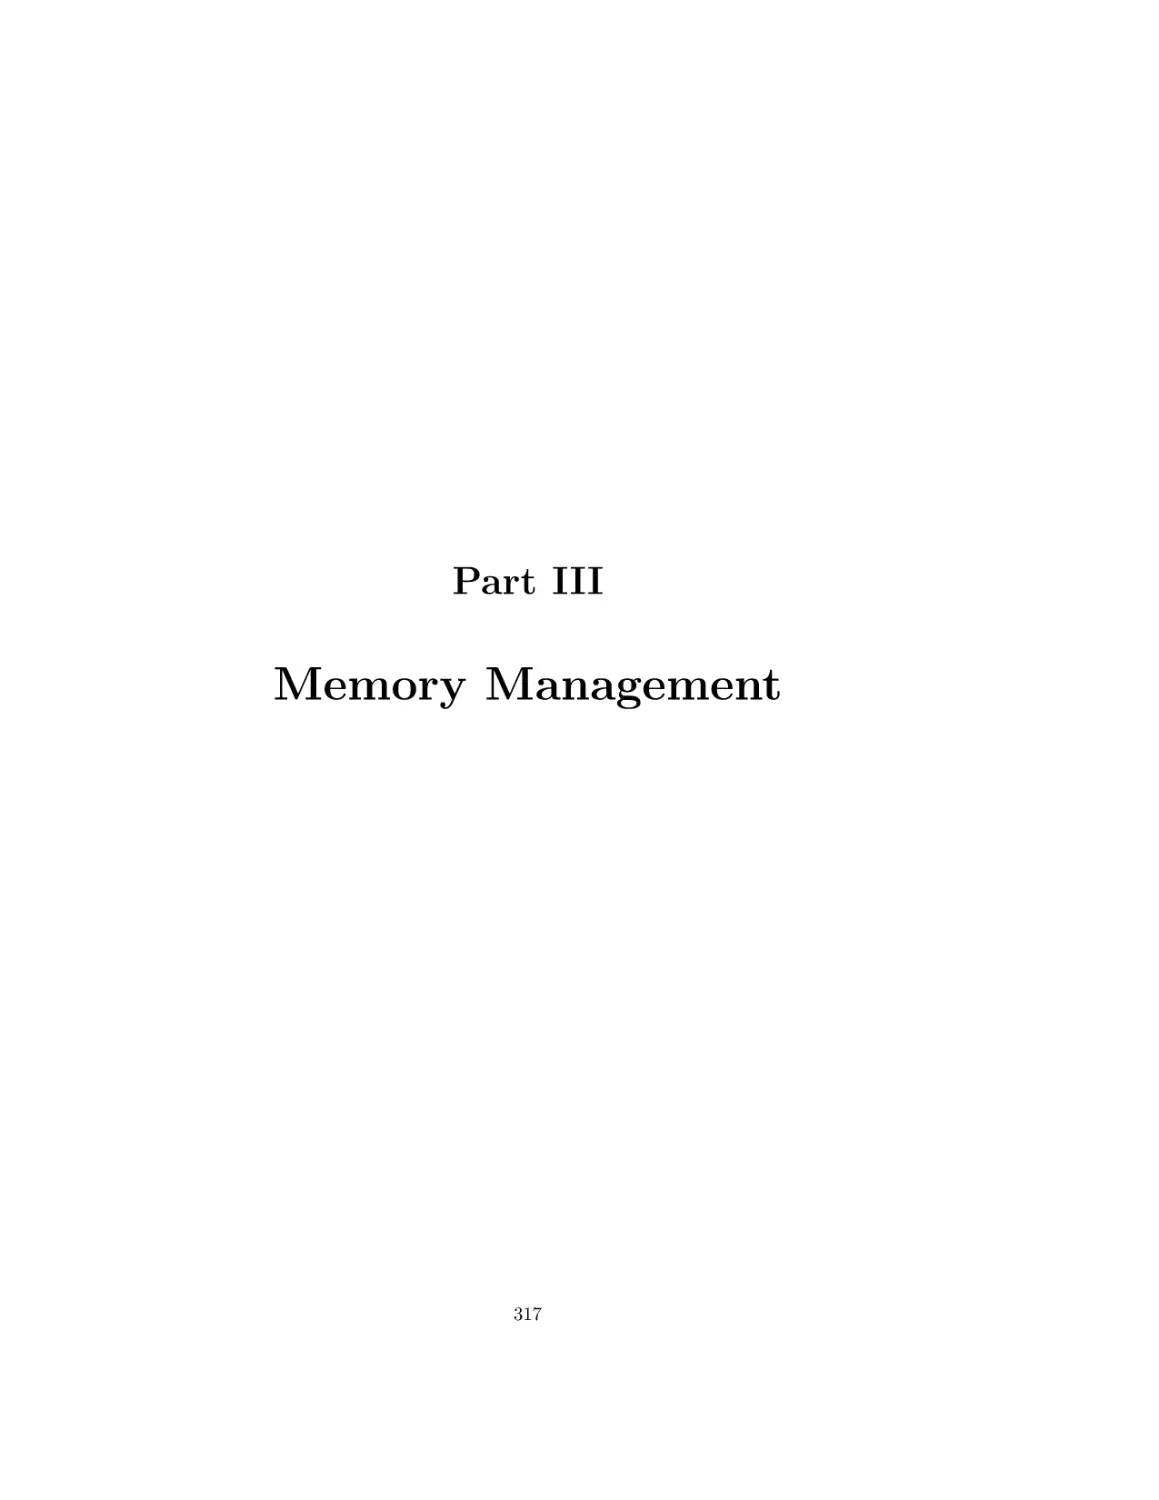 III Memory Management